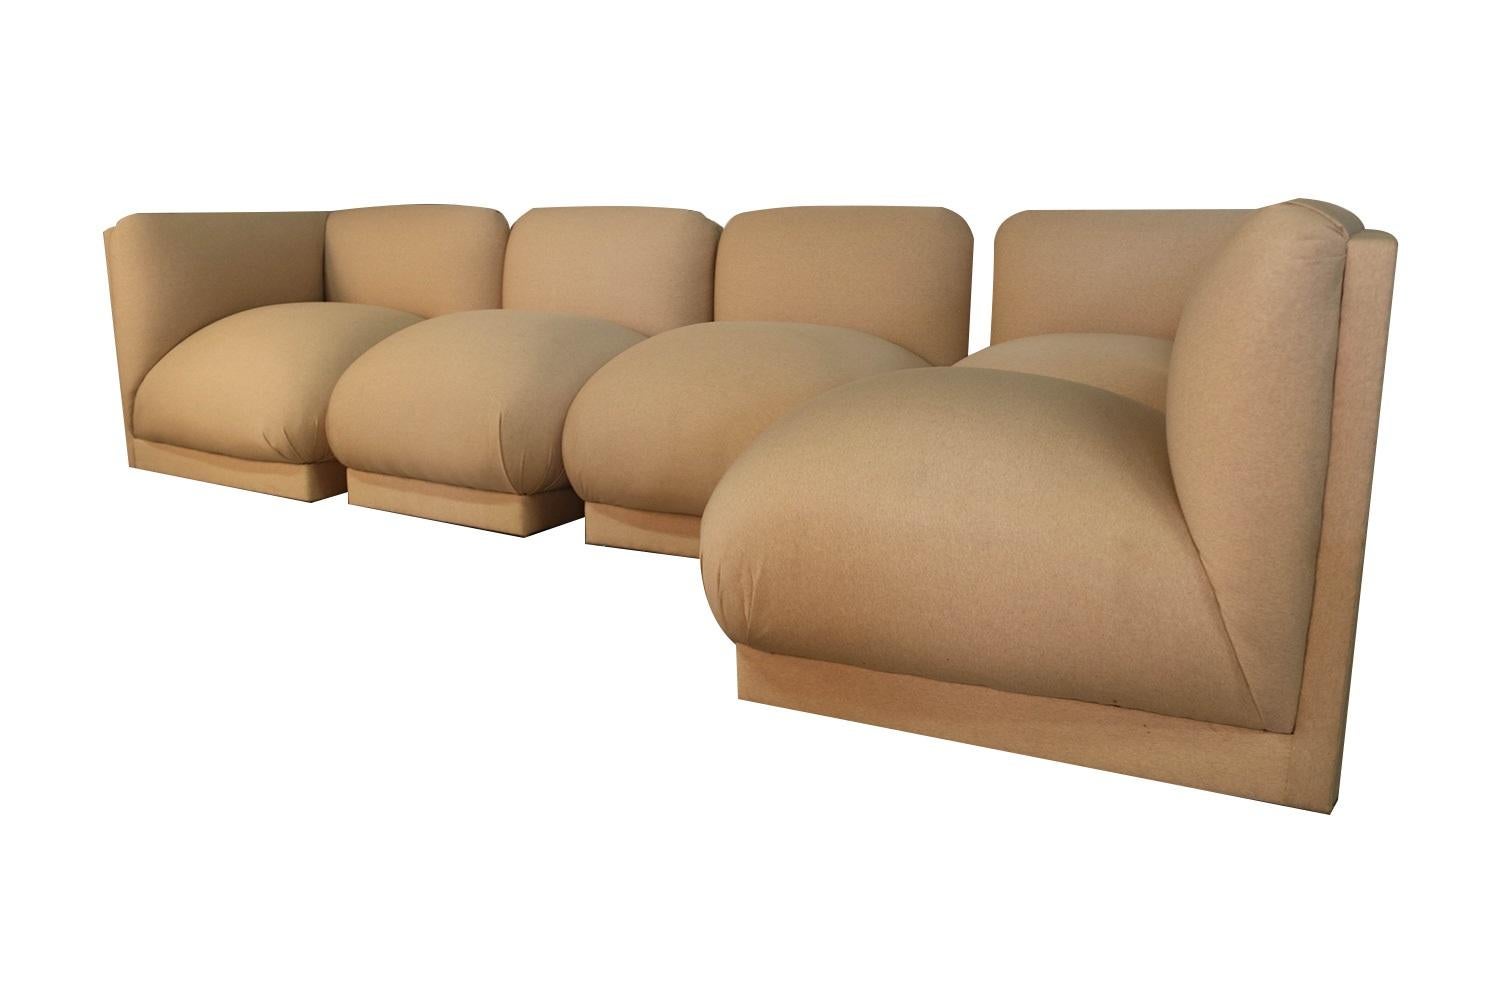 Late 20th Century John Mascheroni Modular Midcentury Sectional Sofa